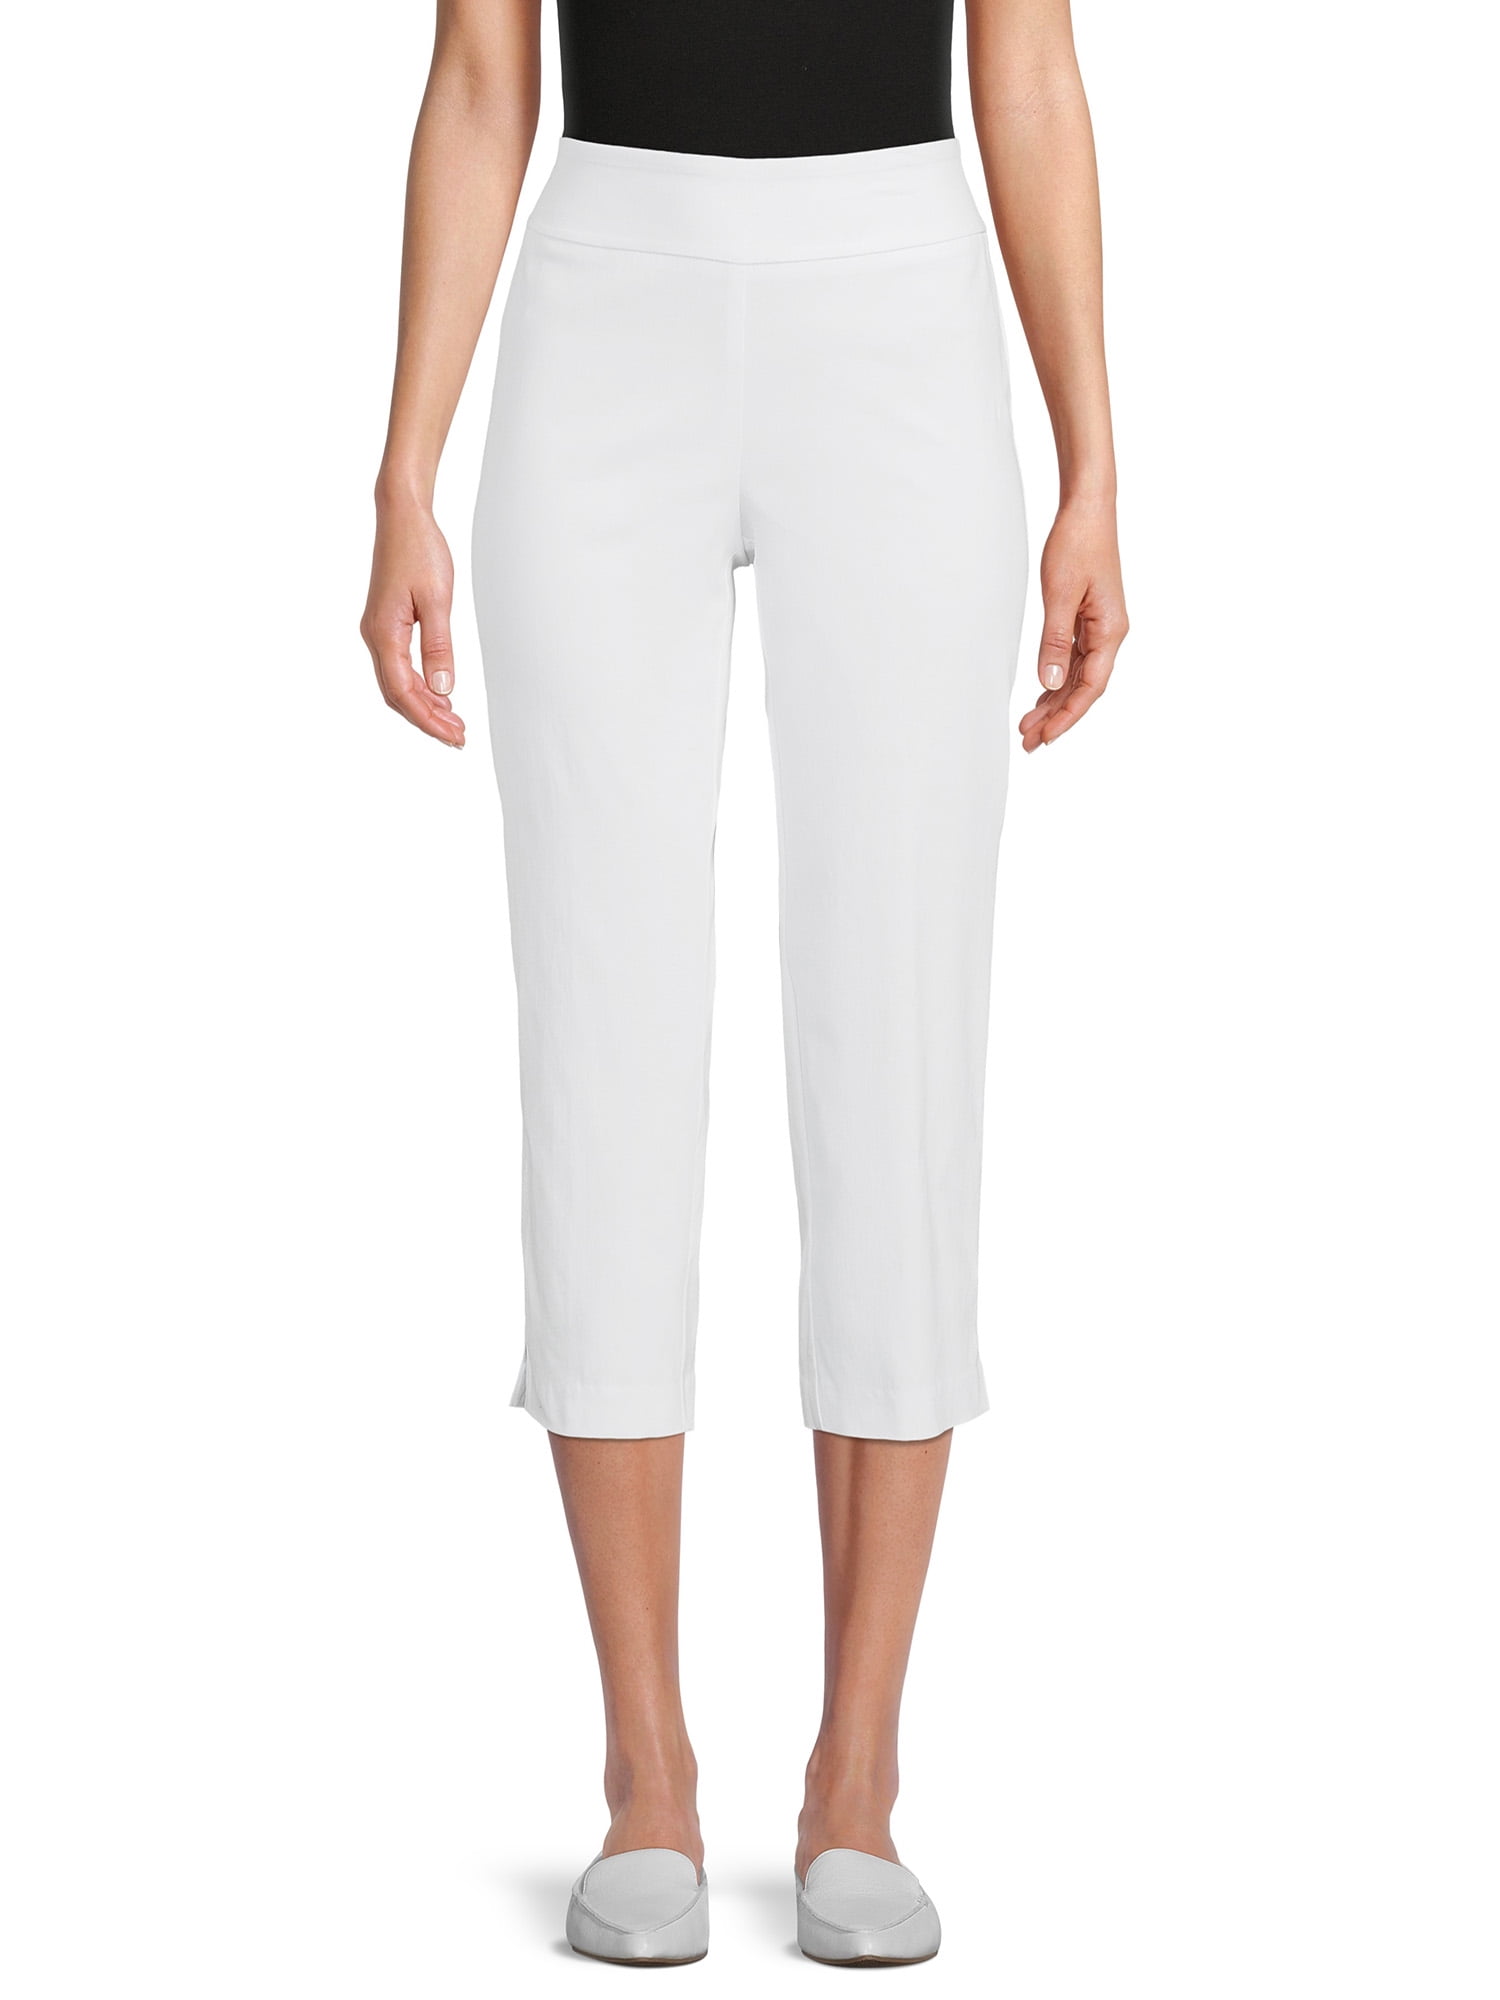 Teez-Her Women's The Skinny Capri Pants, (Large, White) at  Women's  Clothing store: Athletic Capri Pants